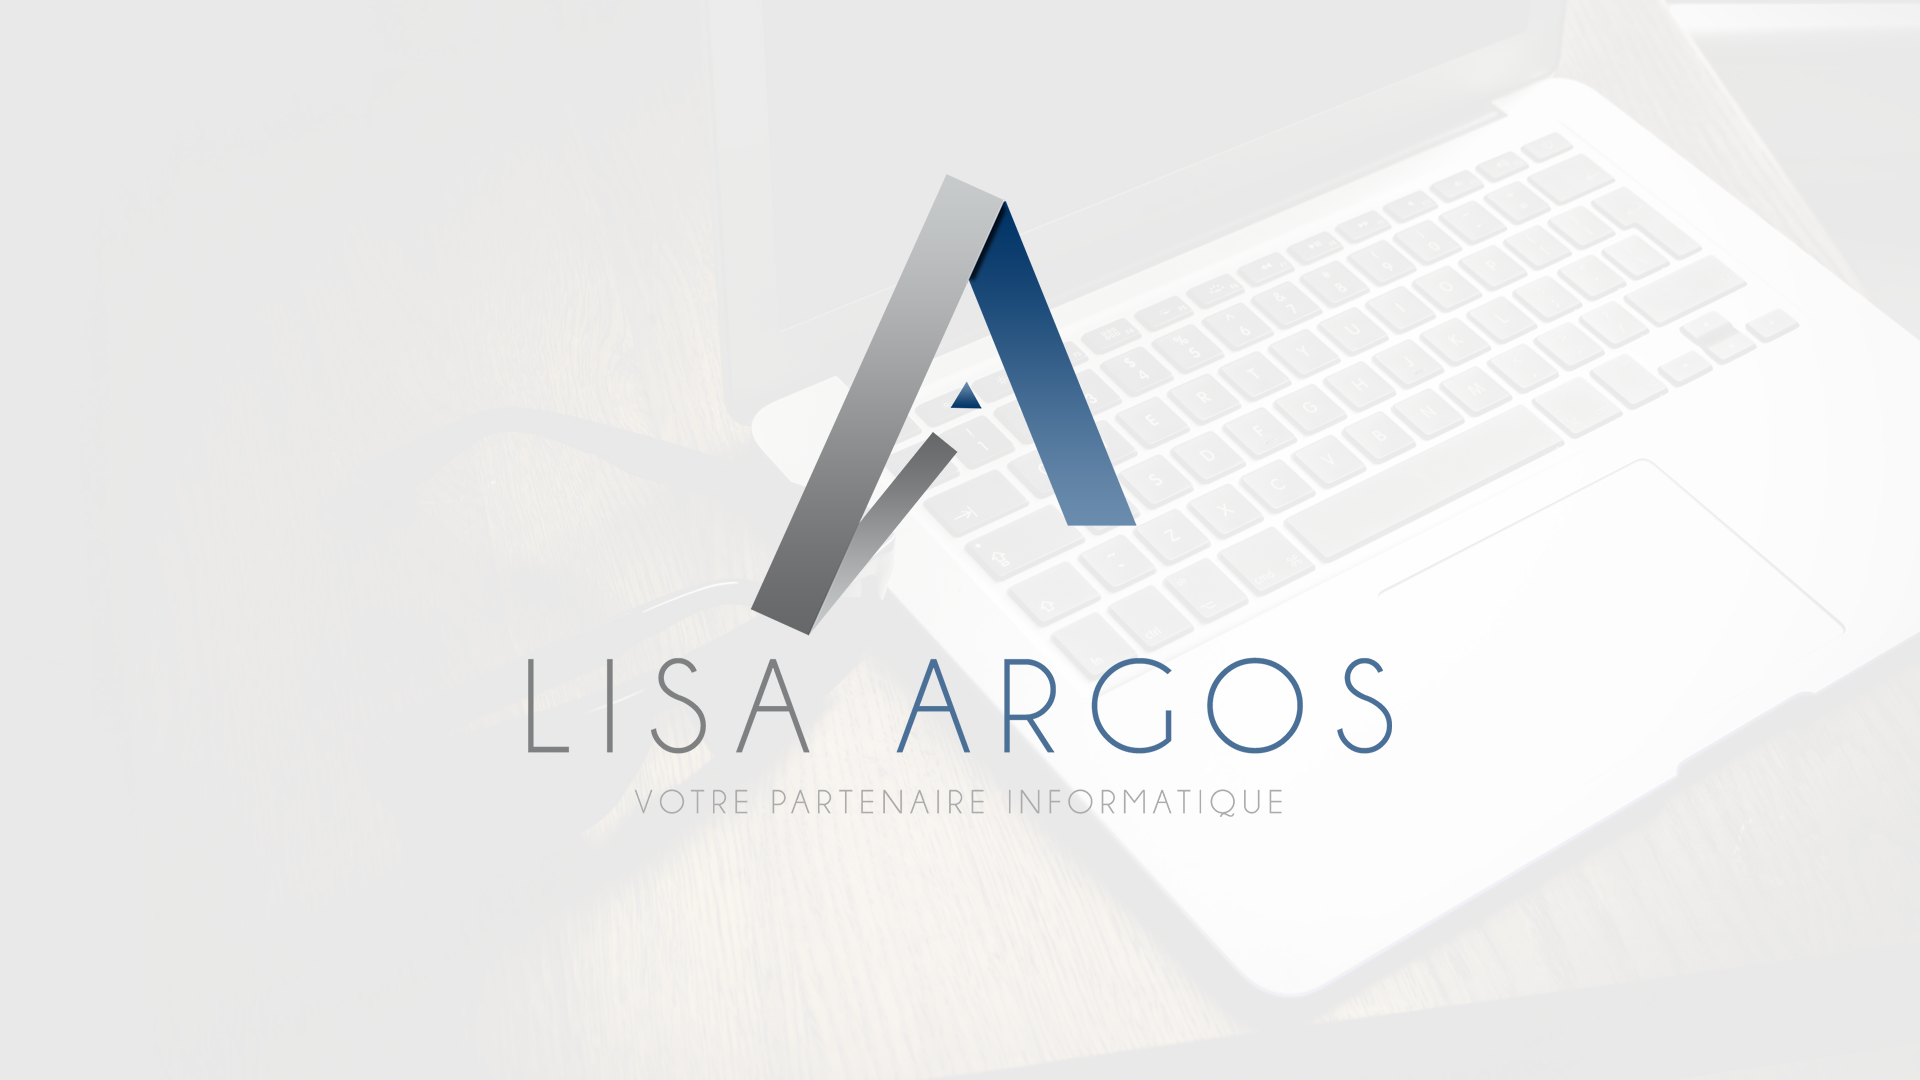 LISA ARGOS - Votre partenaire informatique